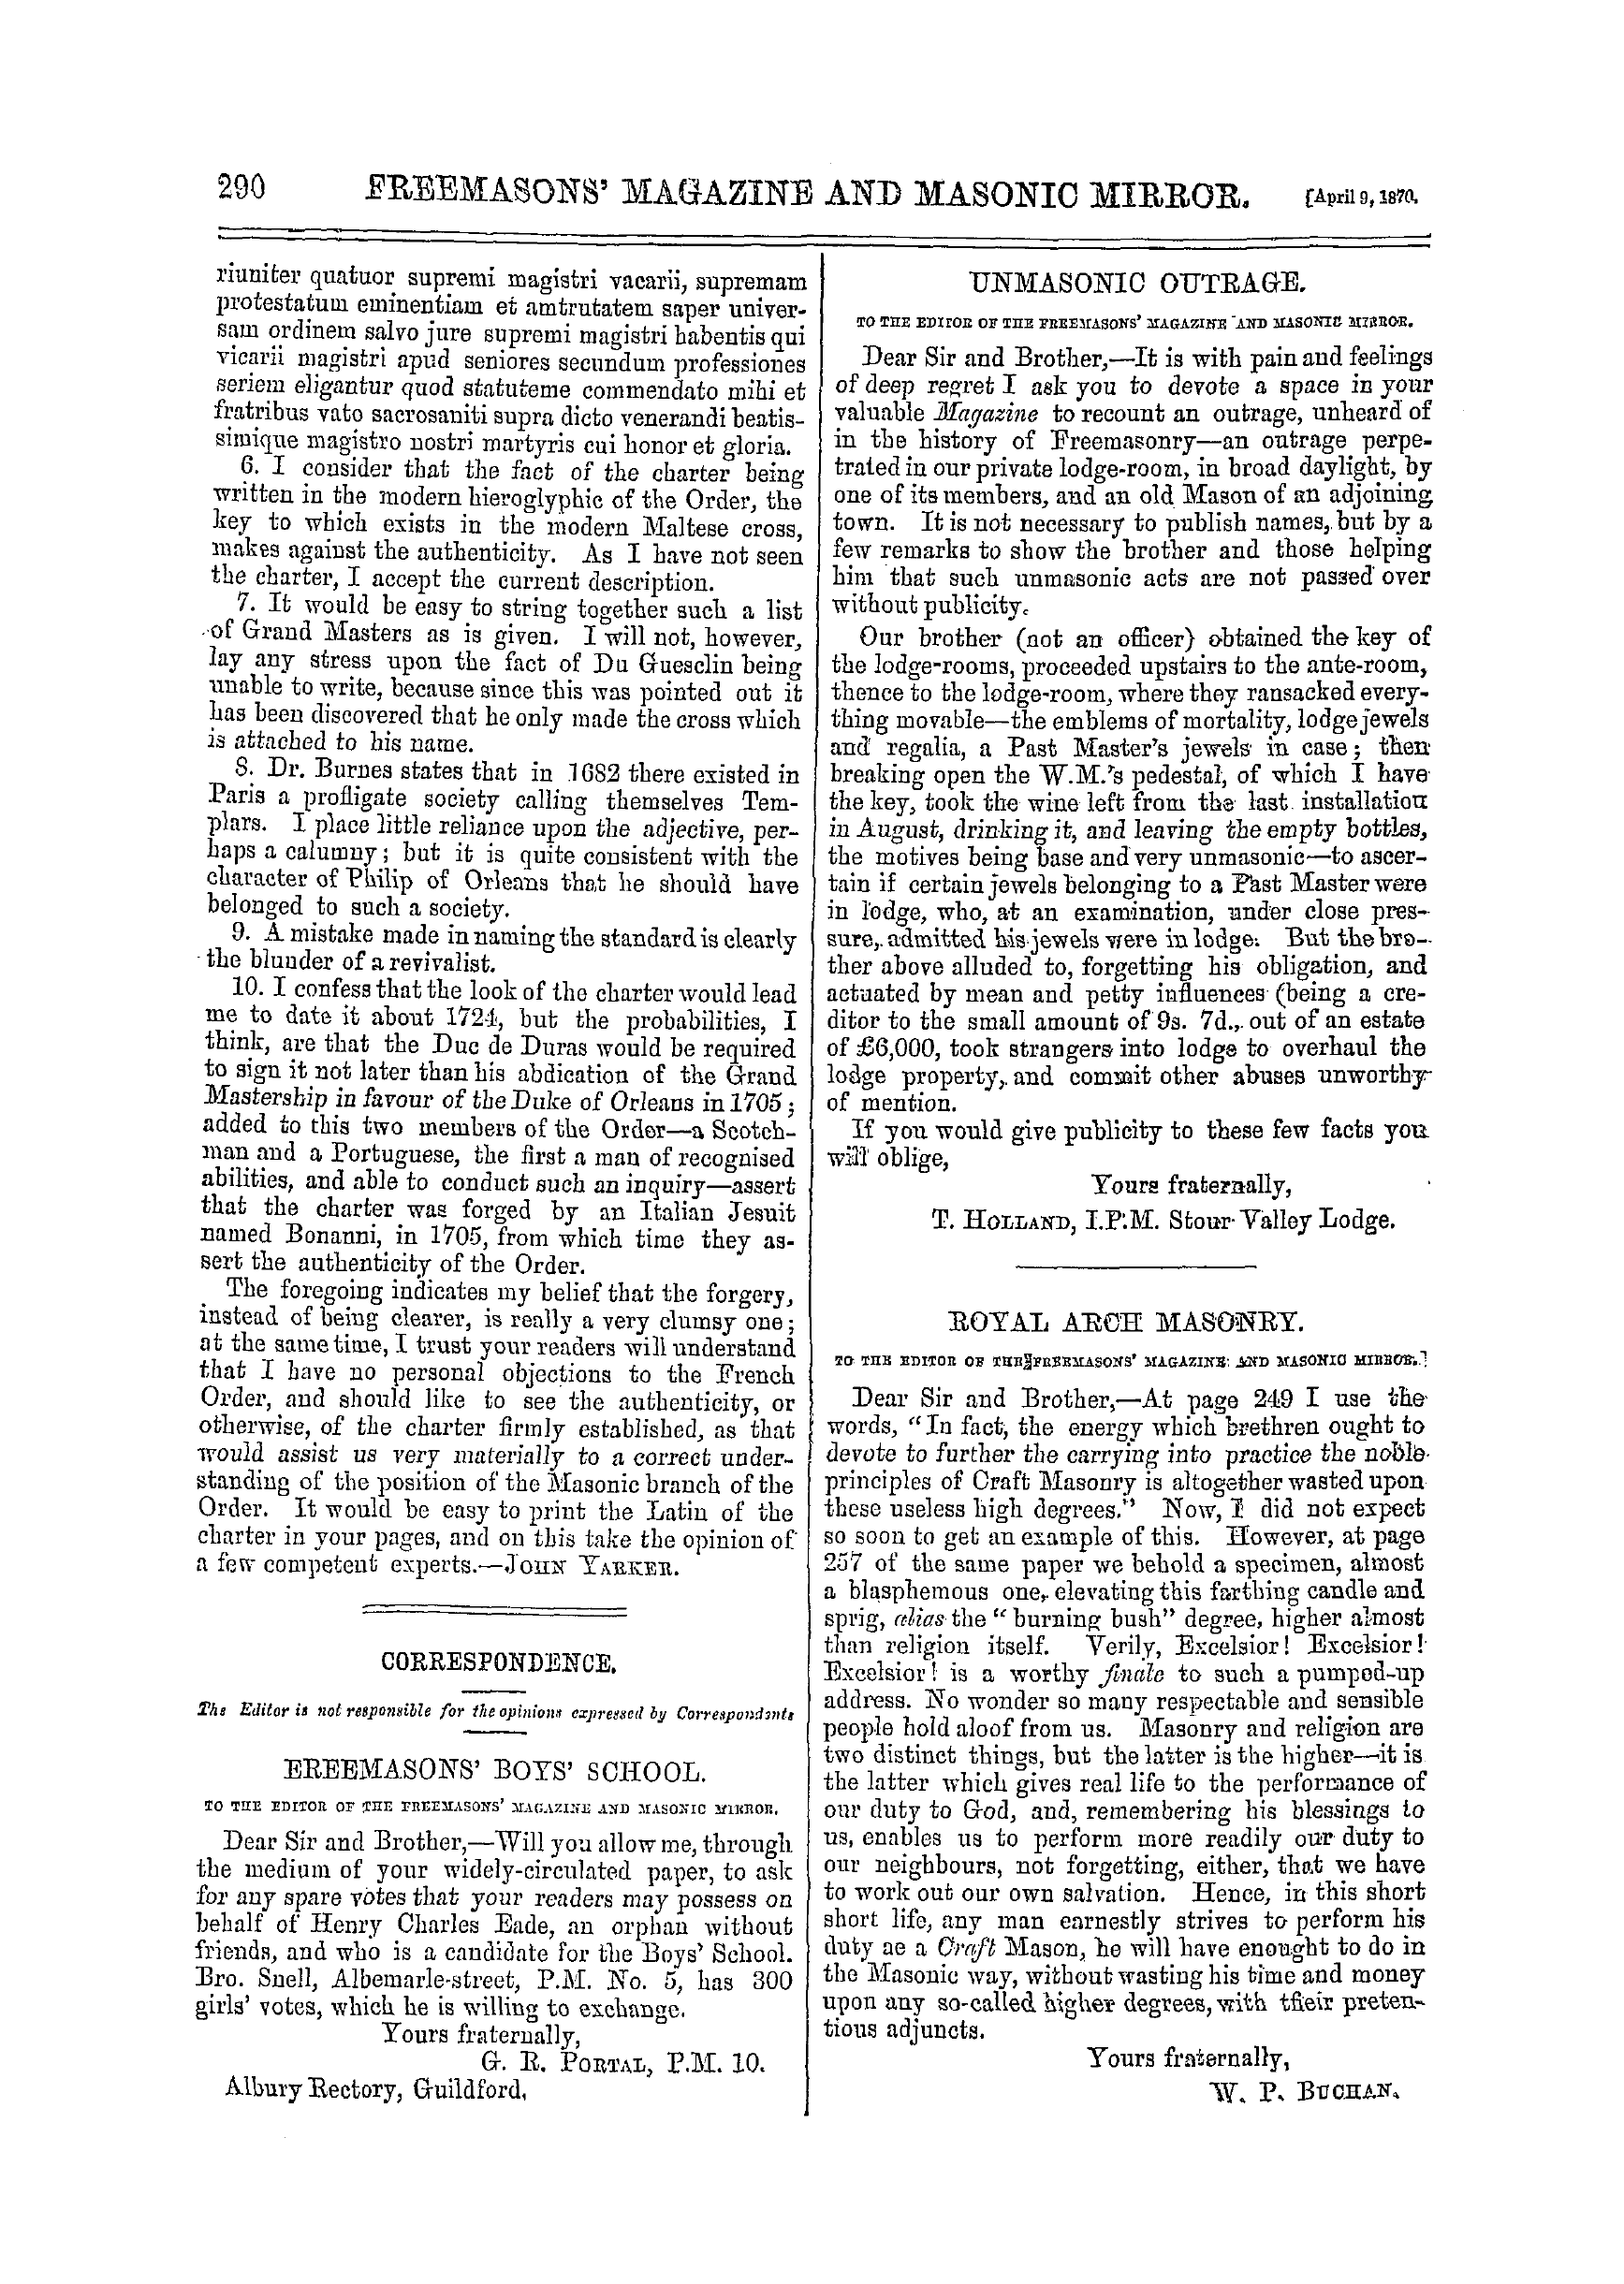 The Freemasons' Monthly Magazine: 1870-04-09 - Correspondence.